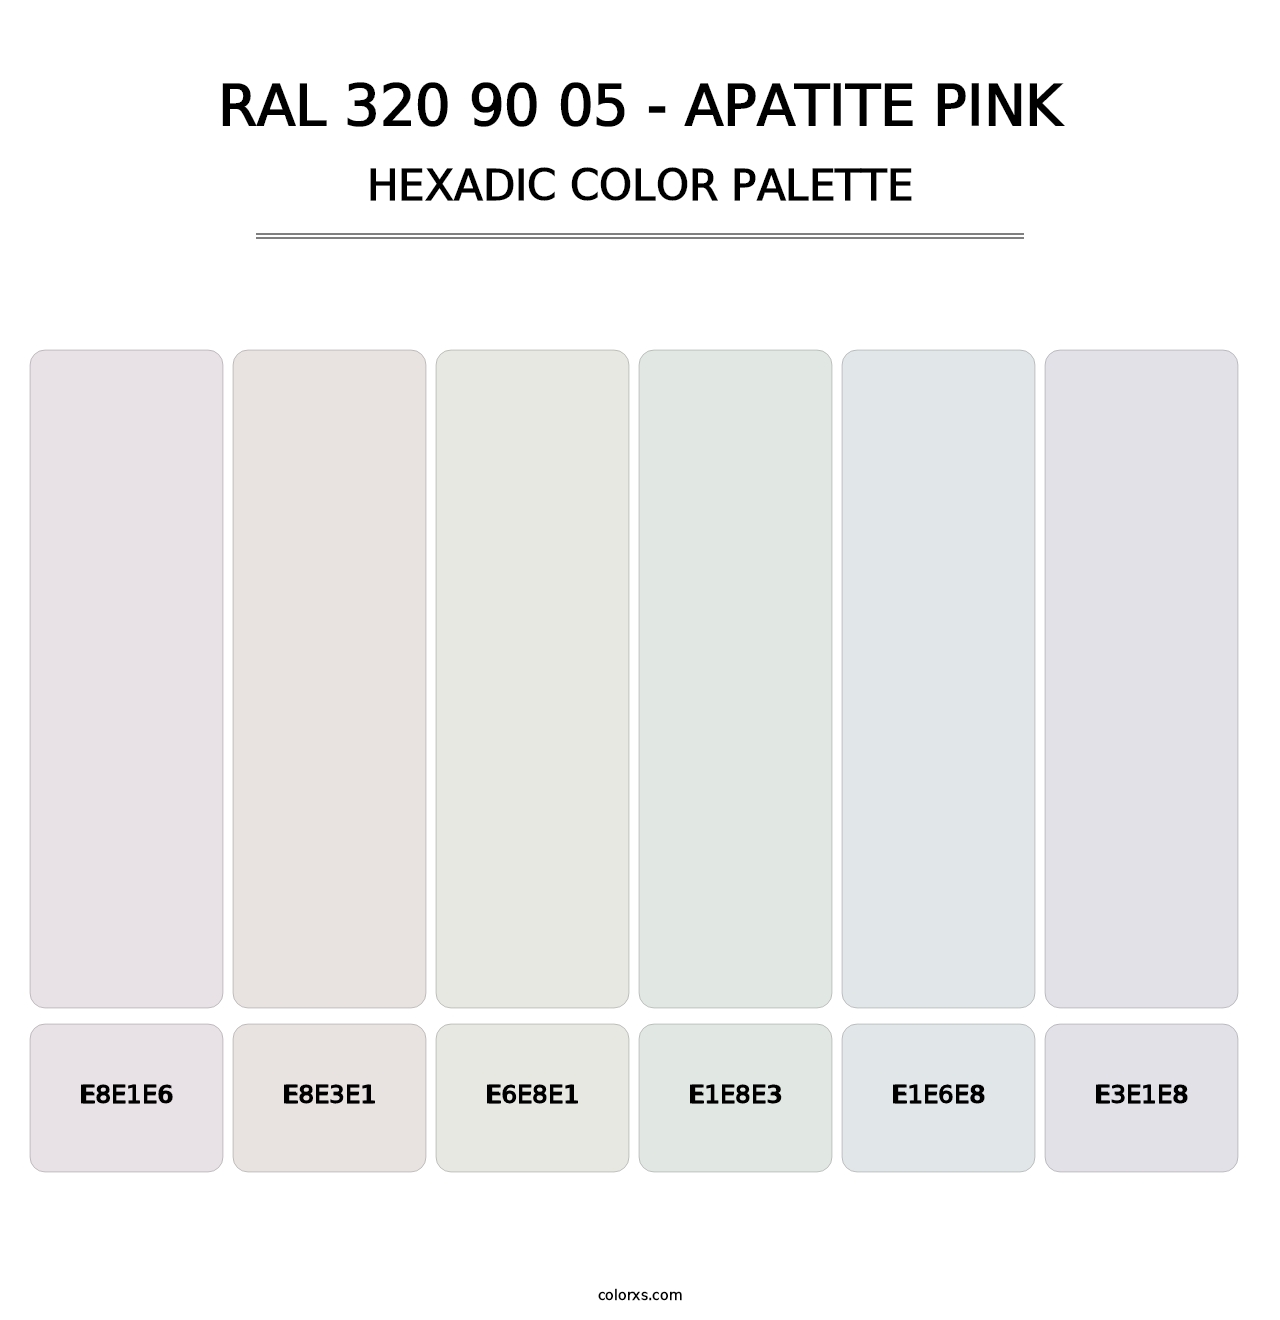 RAL 320 90 05 - Apatite Pink - Hexadic Color Palette